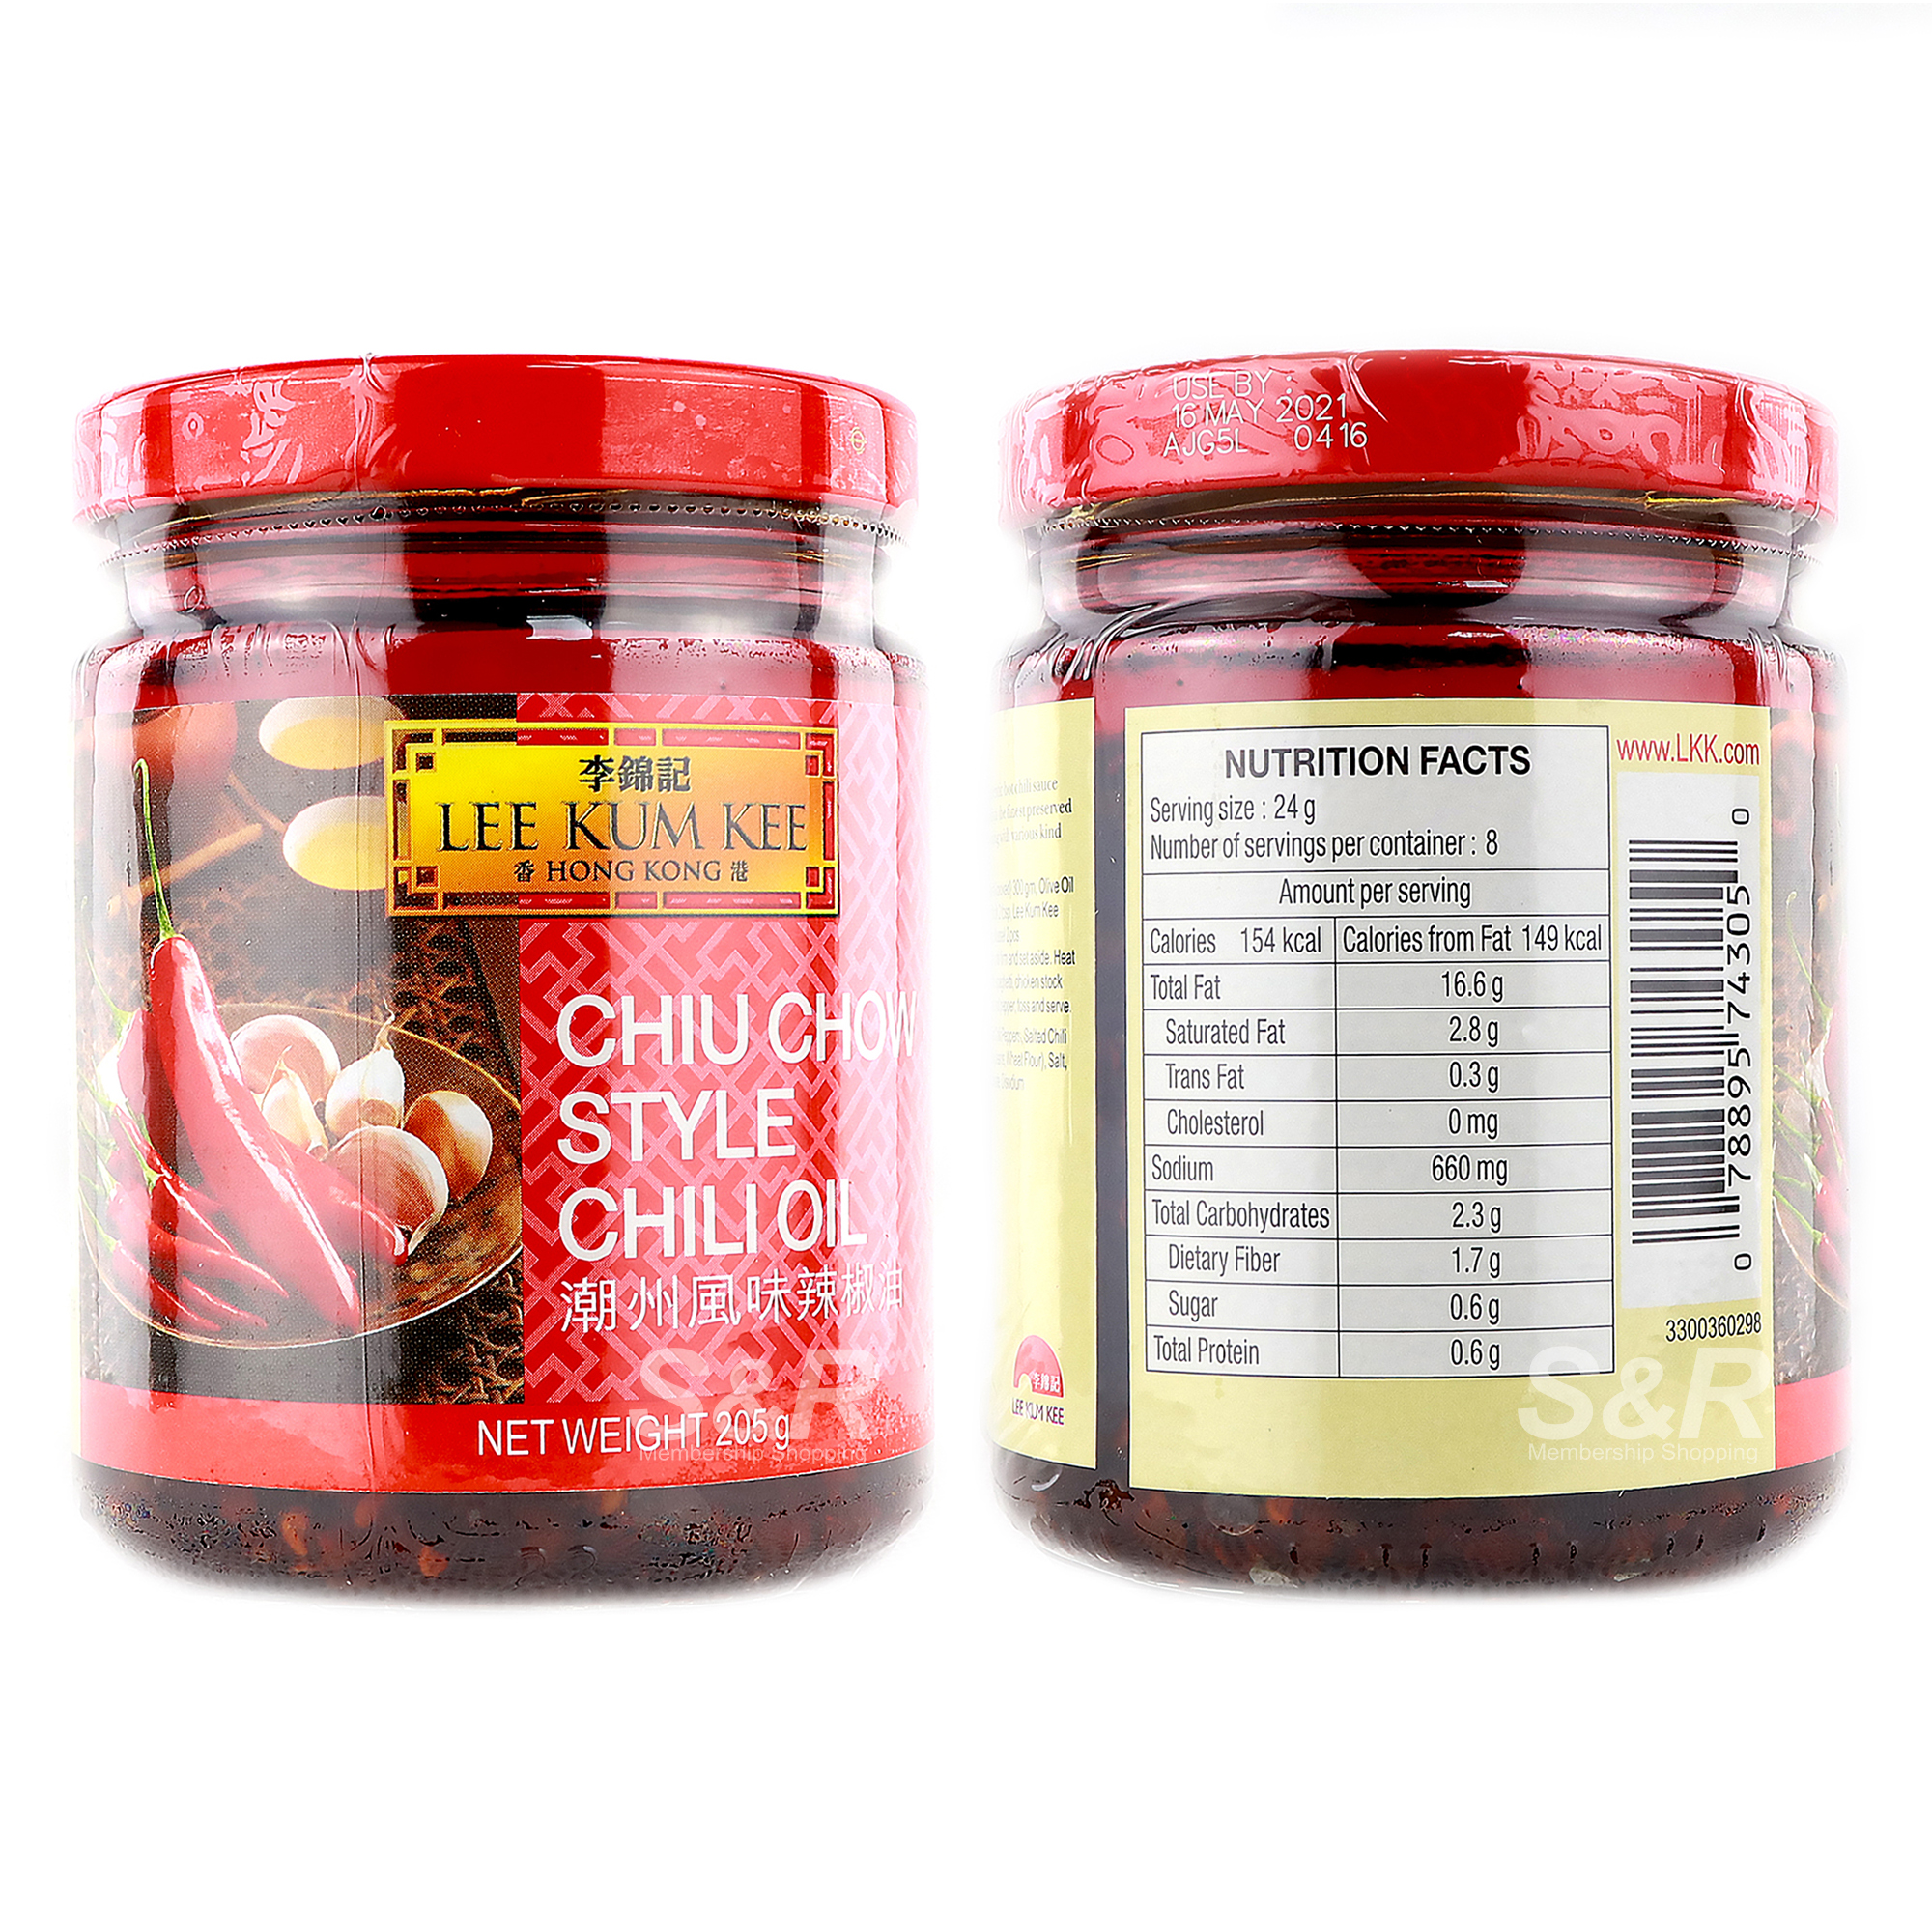 Chiu Chow Style Chili Oil